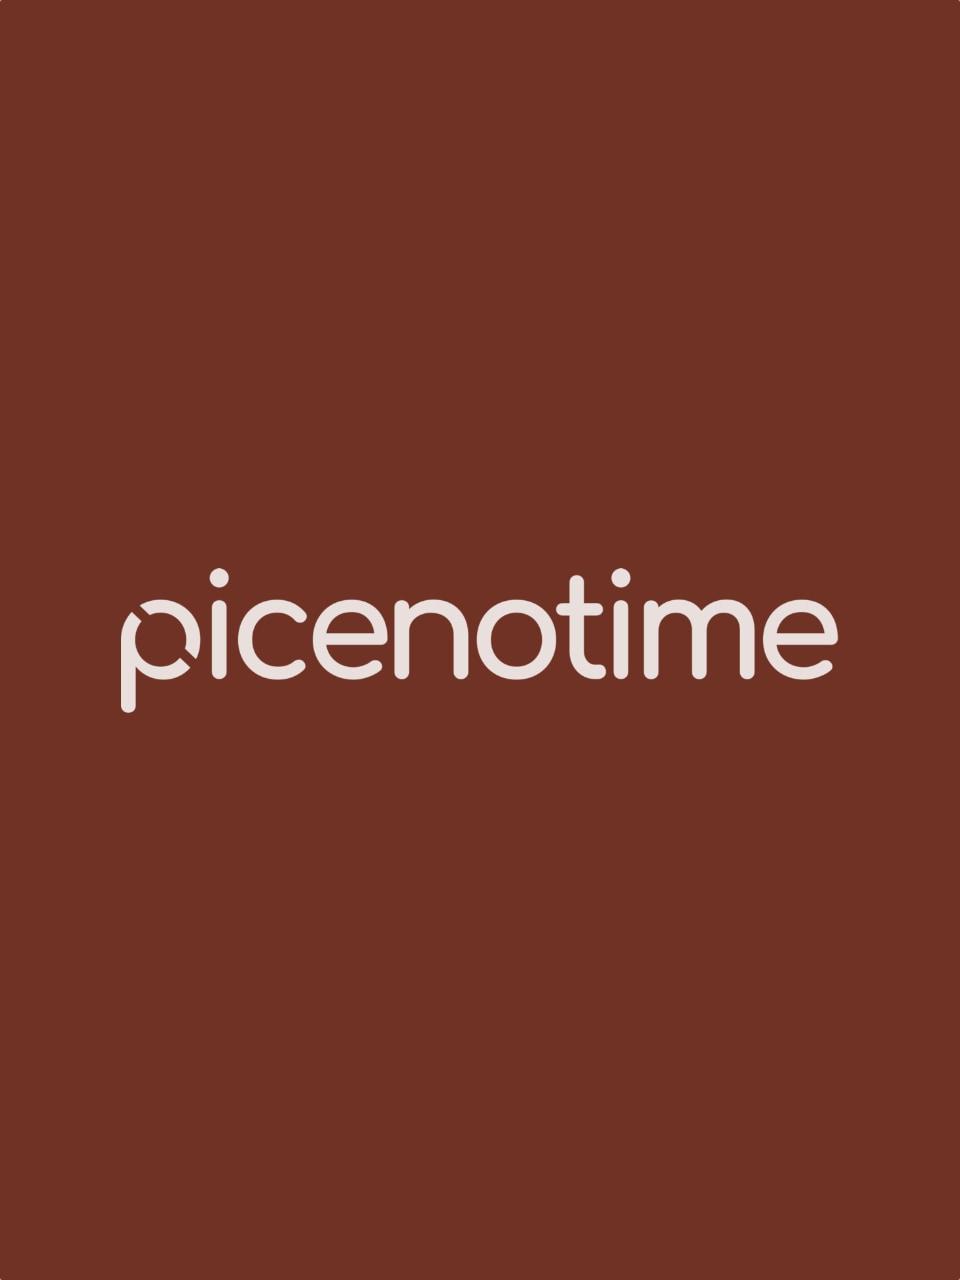 picenotime